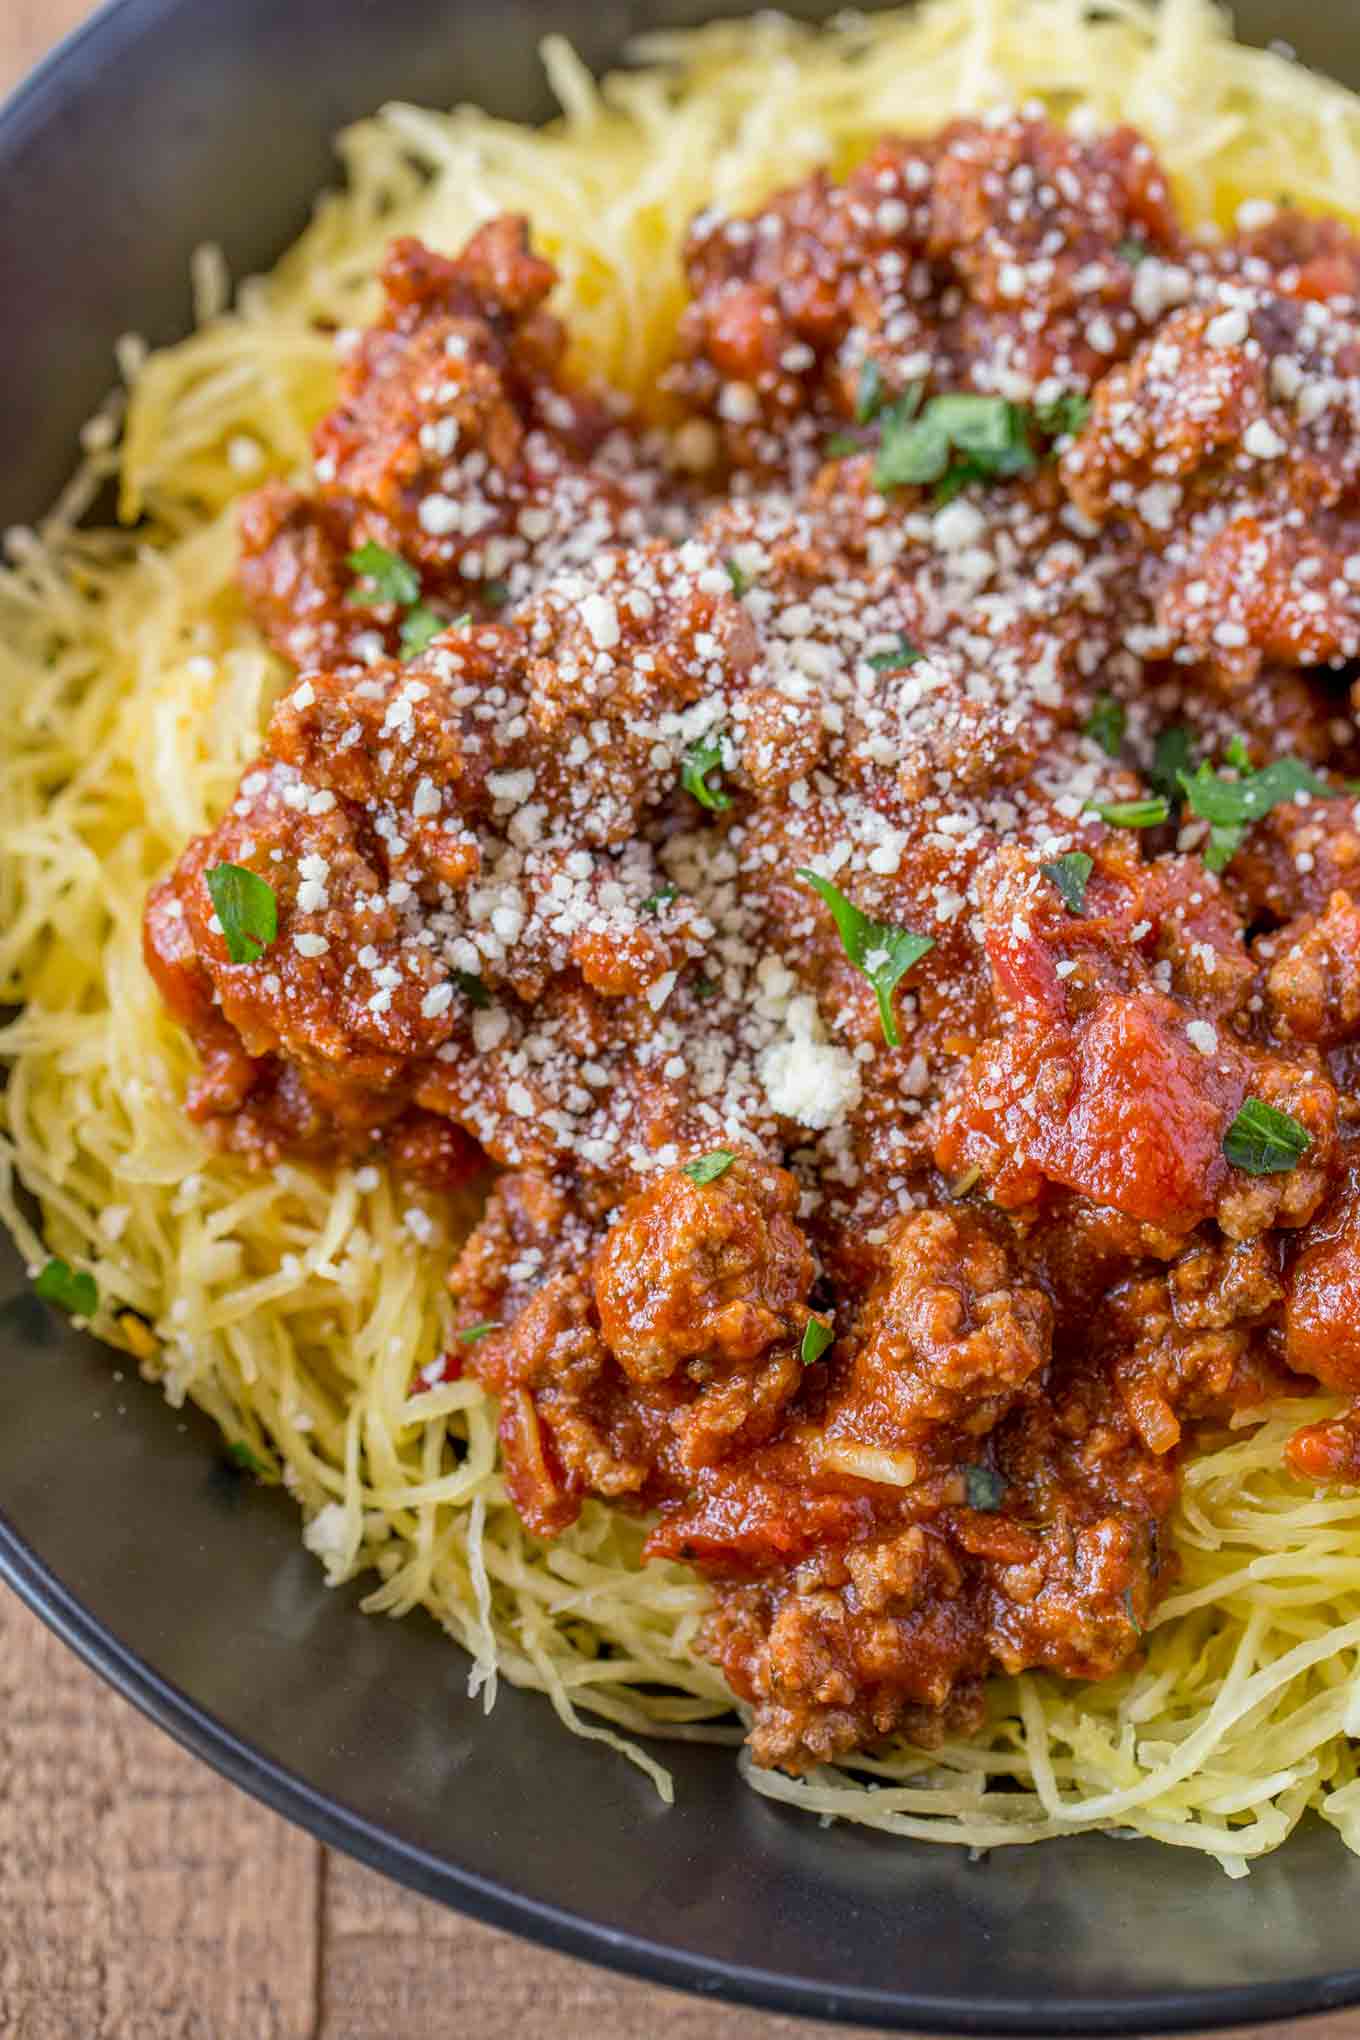 Spaghetti Squash and meat sauce.